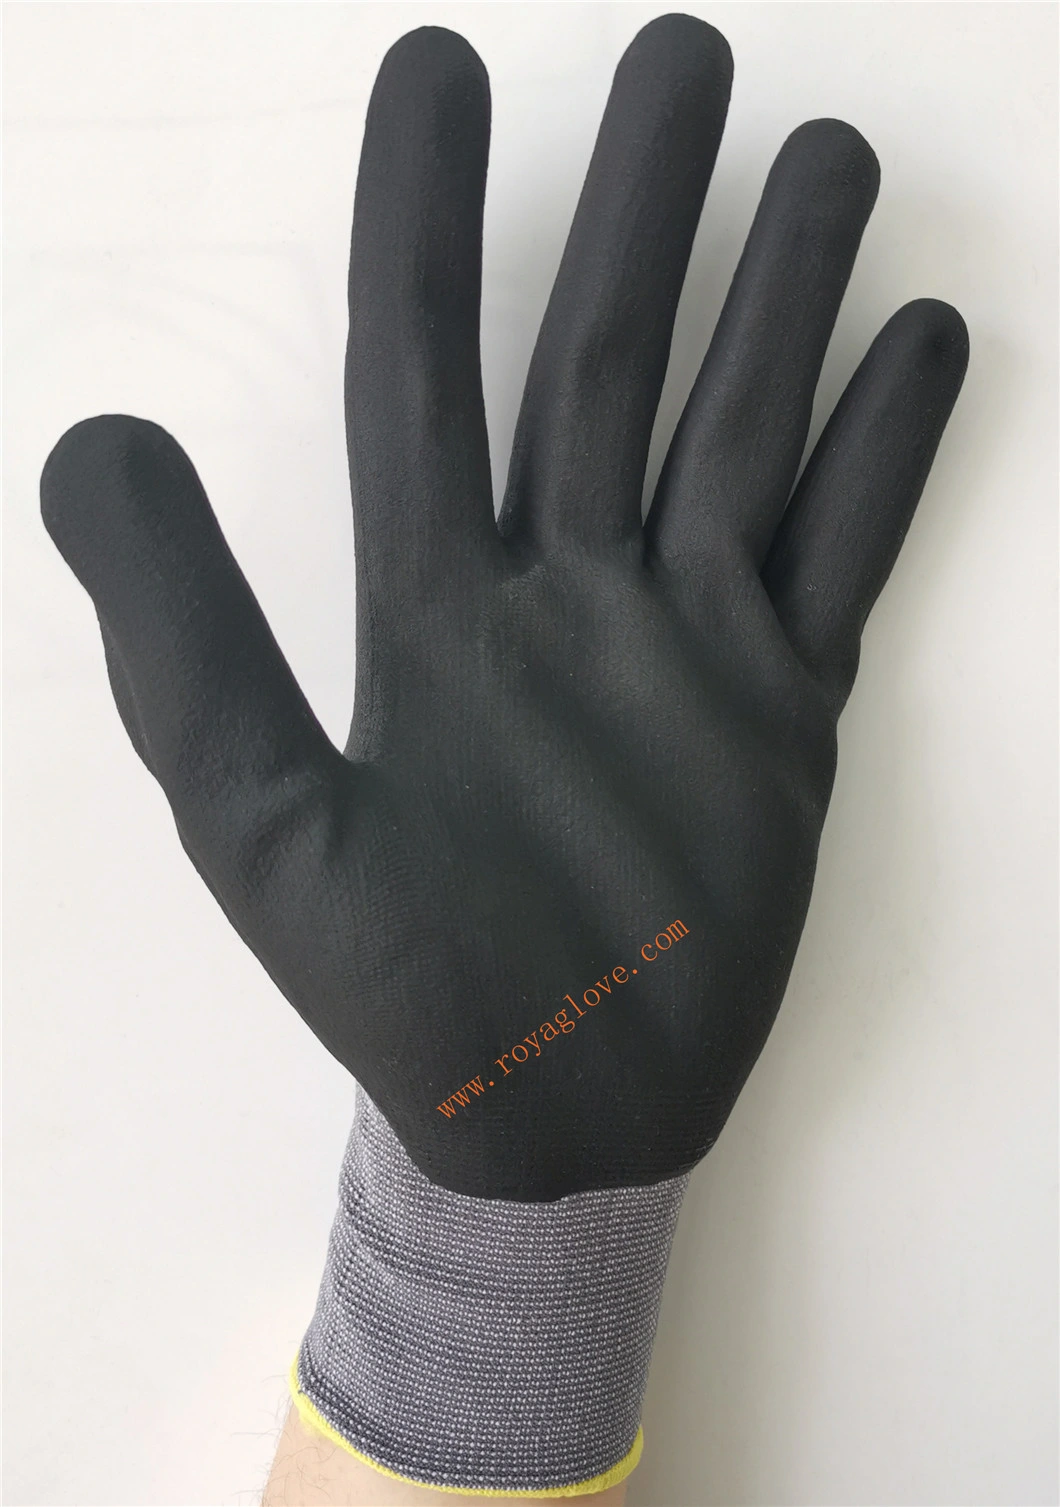 15g Nylon & Spandex Glove Nitrile Coated Safety Work Gloves Ultrafine Industrial Gloves /Work Gloves/Working Gloves /Nitrile Gloves